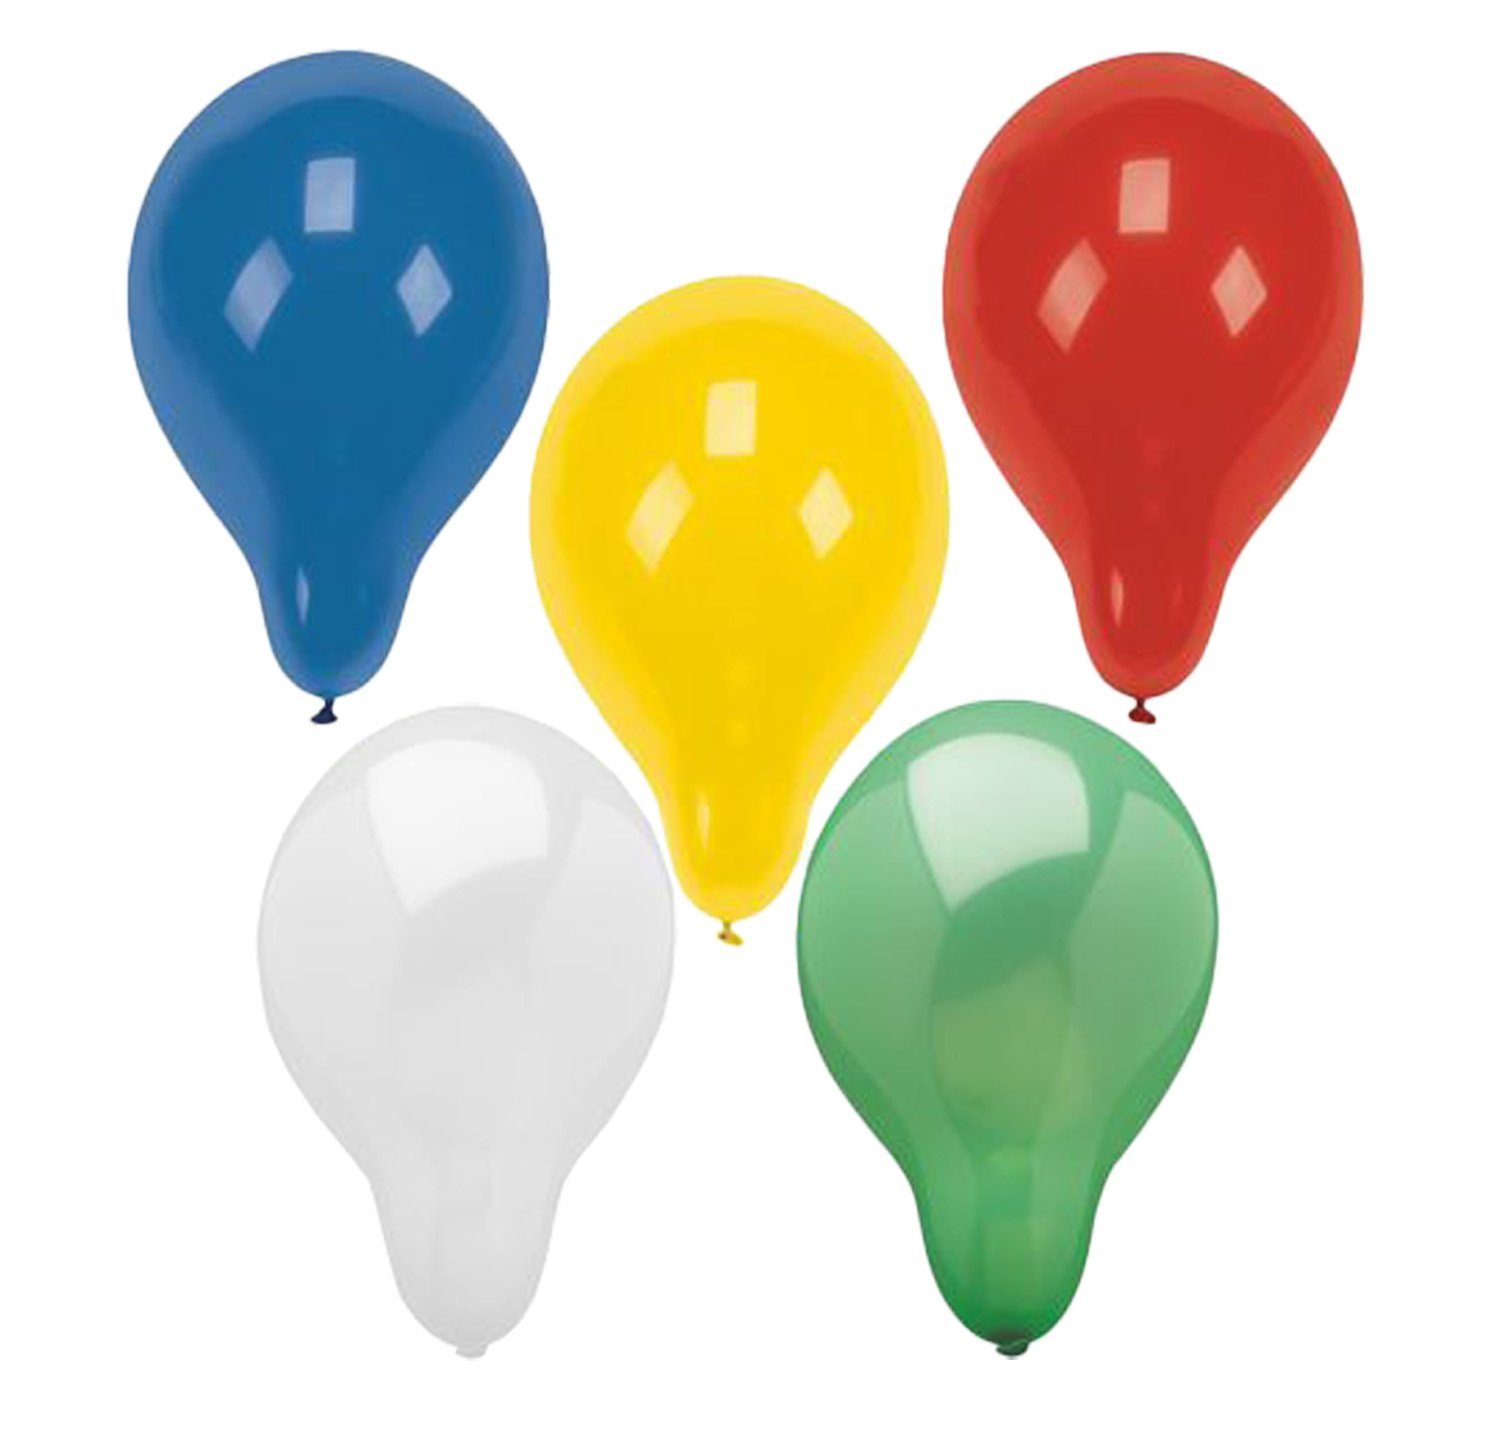 Spalier 8 Luftballons Ø 32 cm farbig sortiert Dekoration Mottoparty Feier